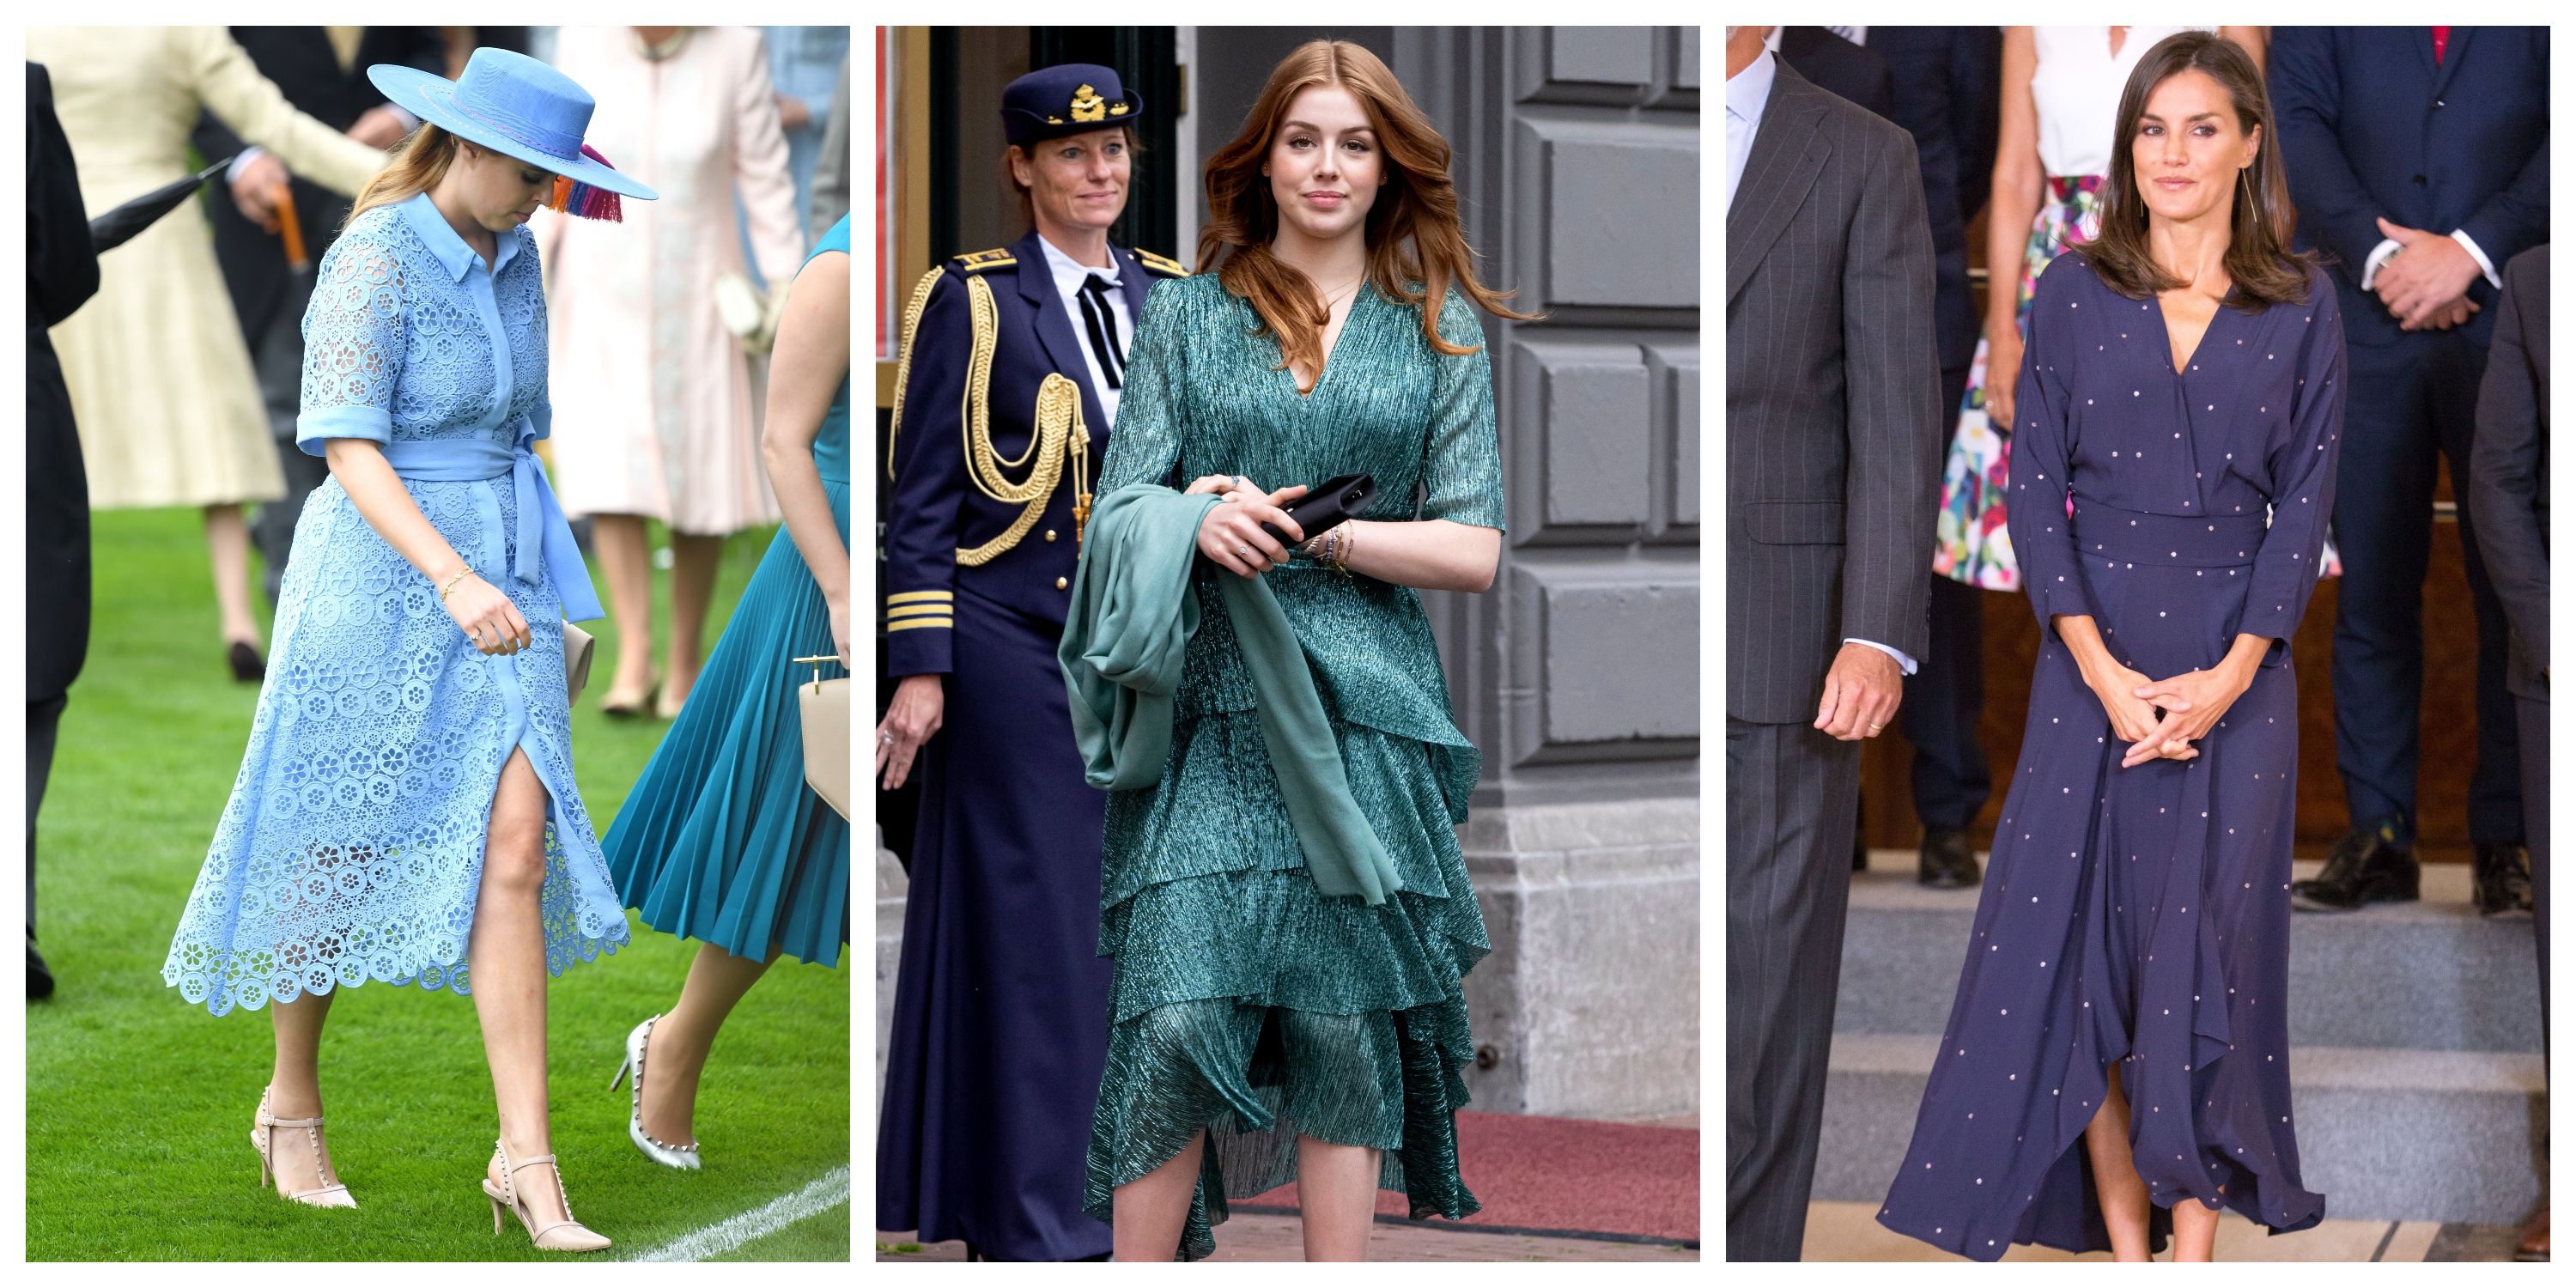 Maje: ropa favorita de princesas y reinas europeas